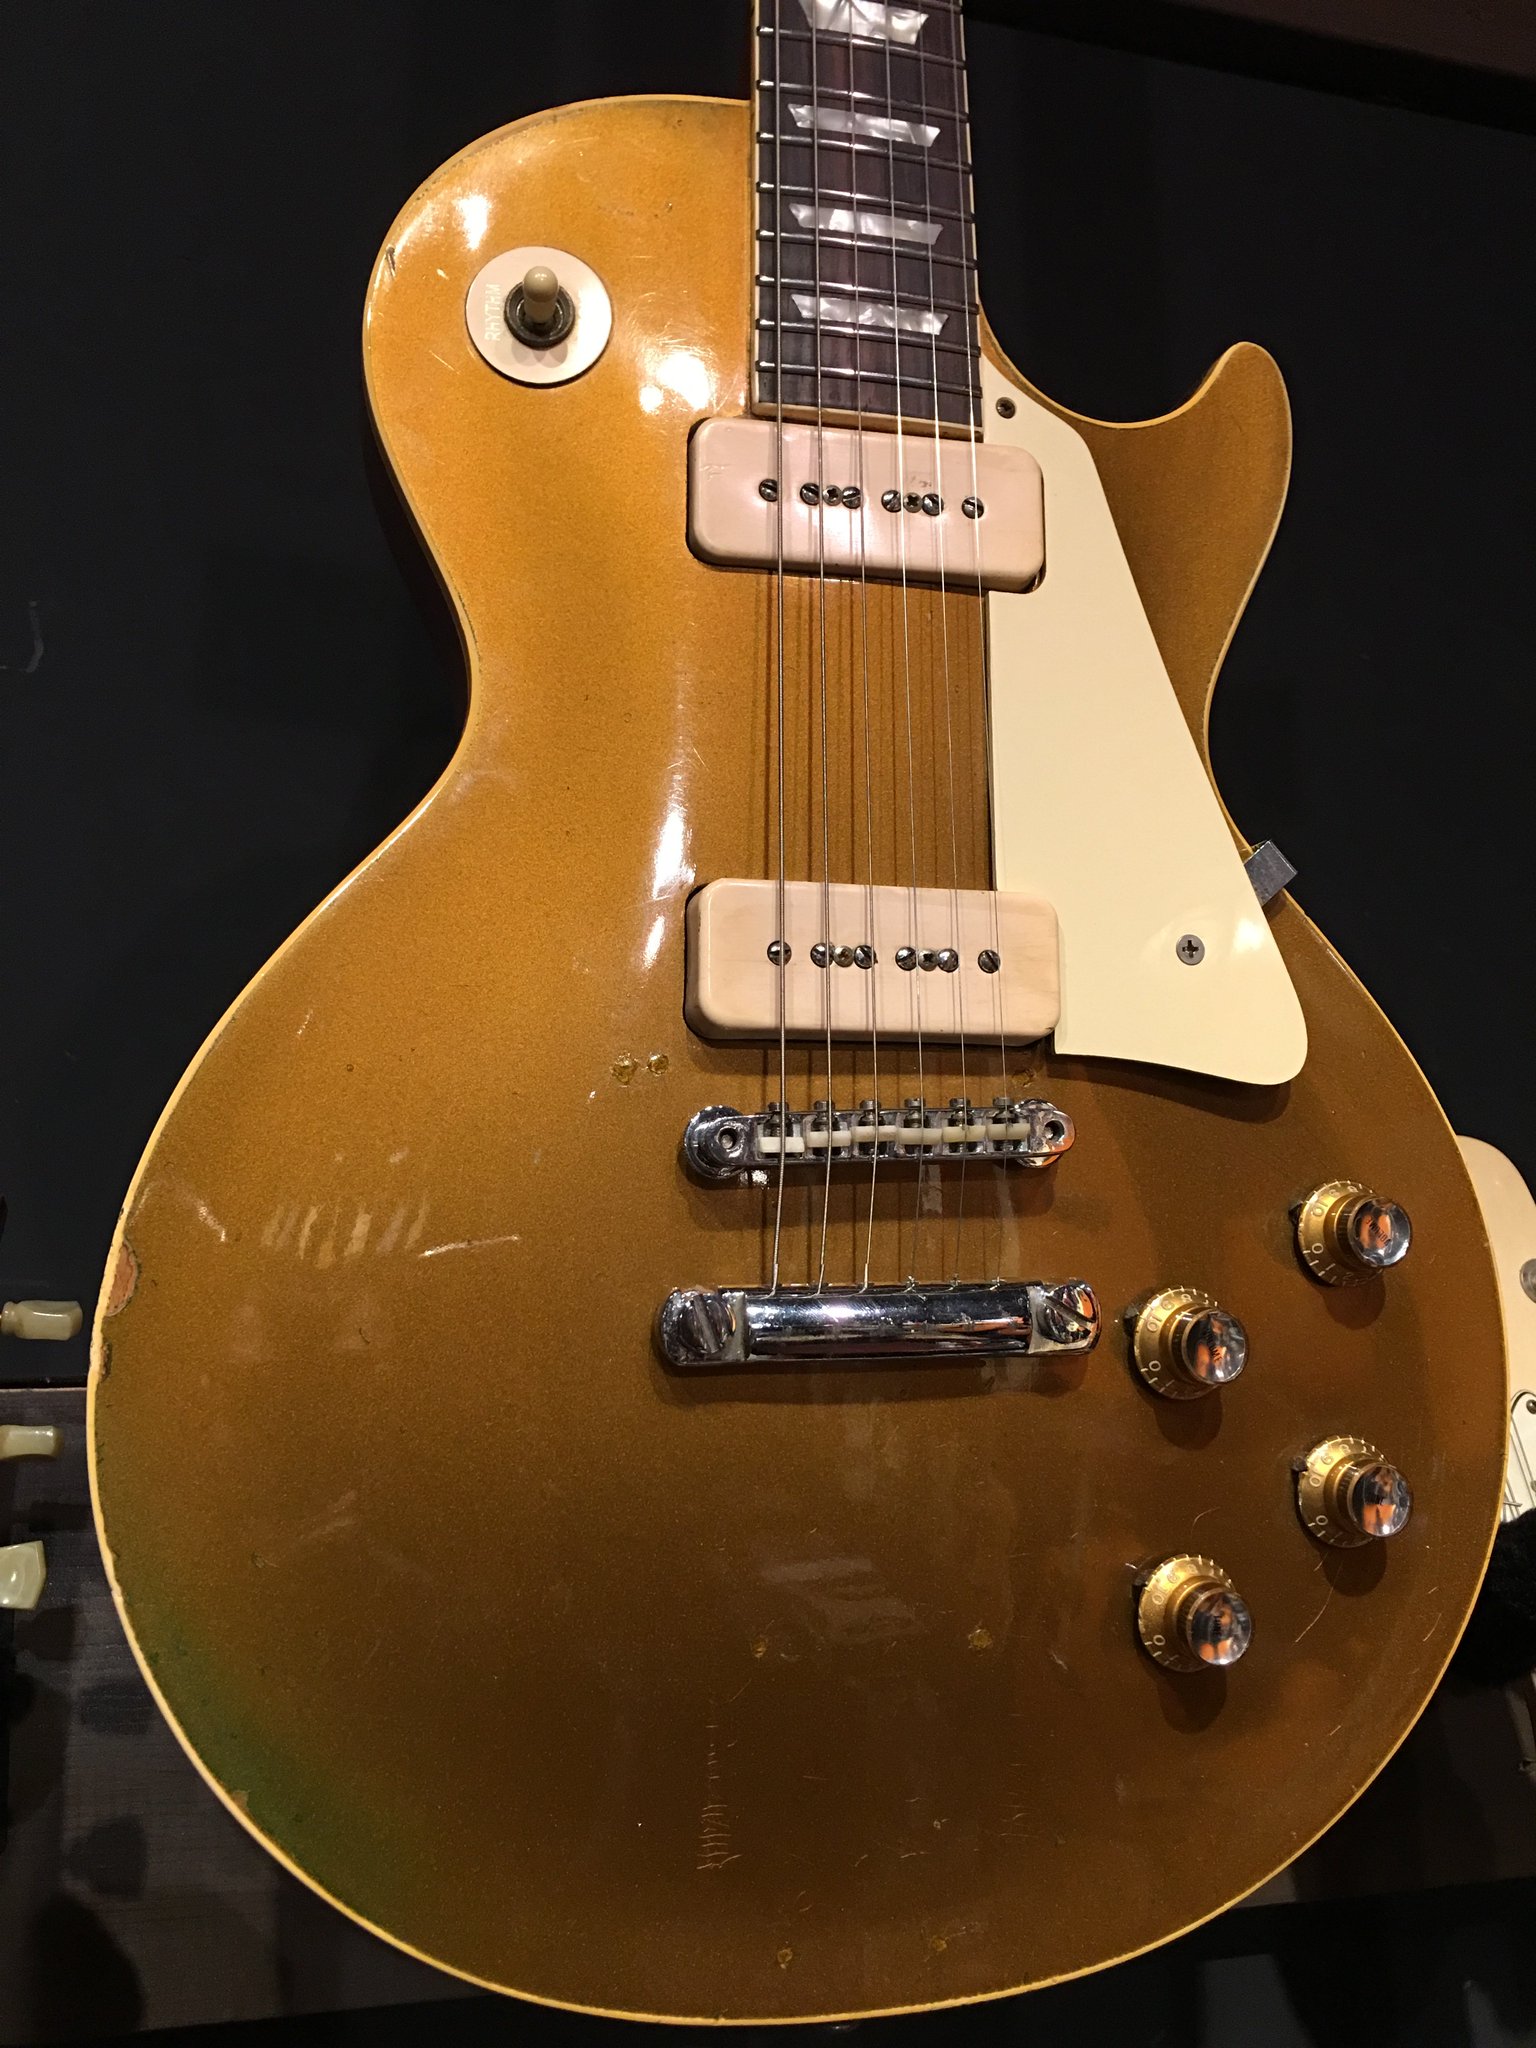 GUITAR TRIBE OSAKA on Twitter: "Gibson 1969 Les Paul Standard Gold Top